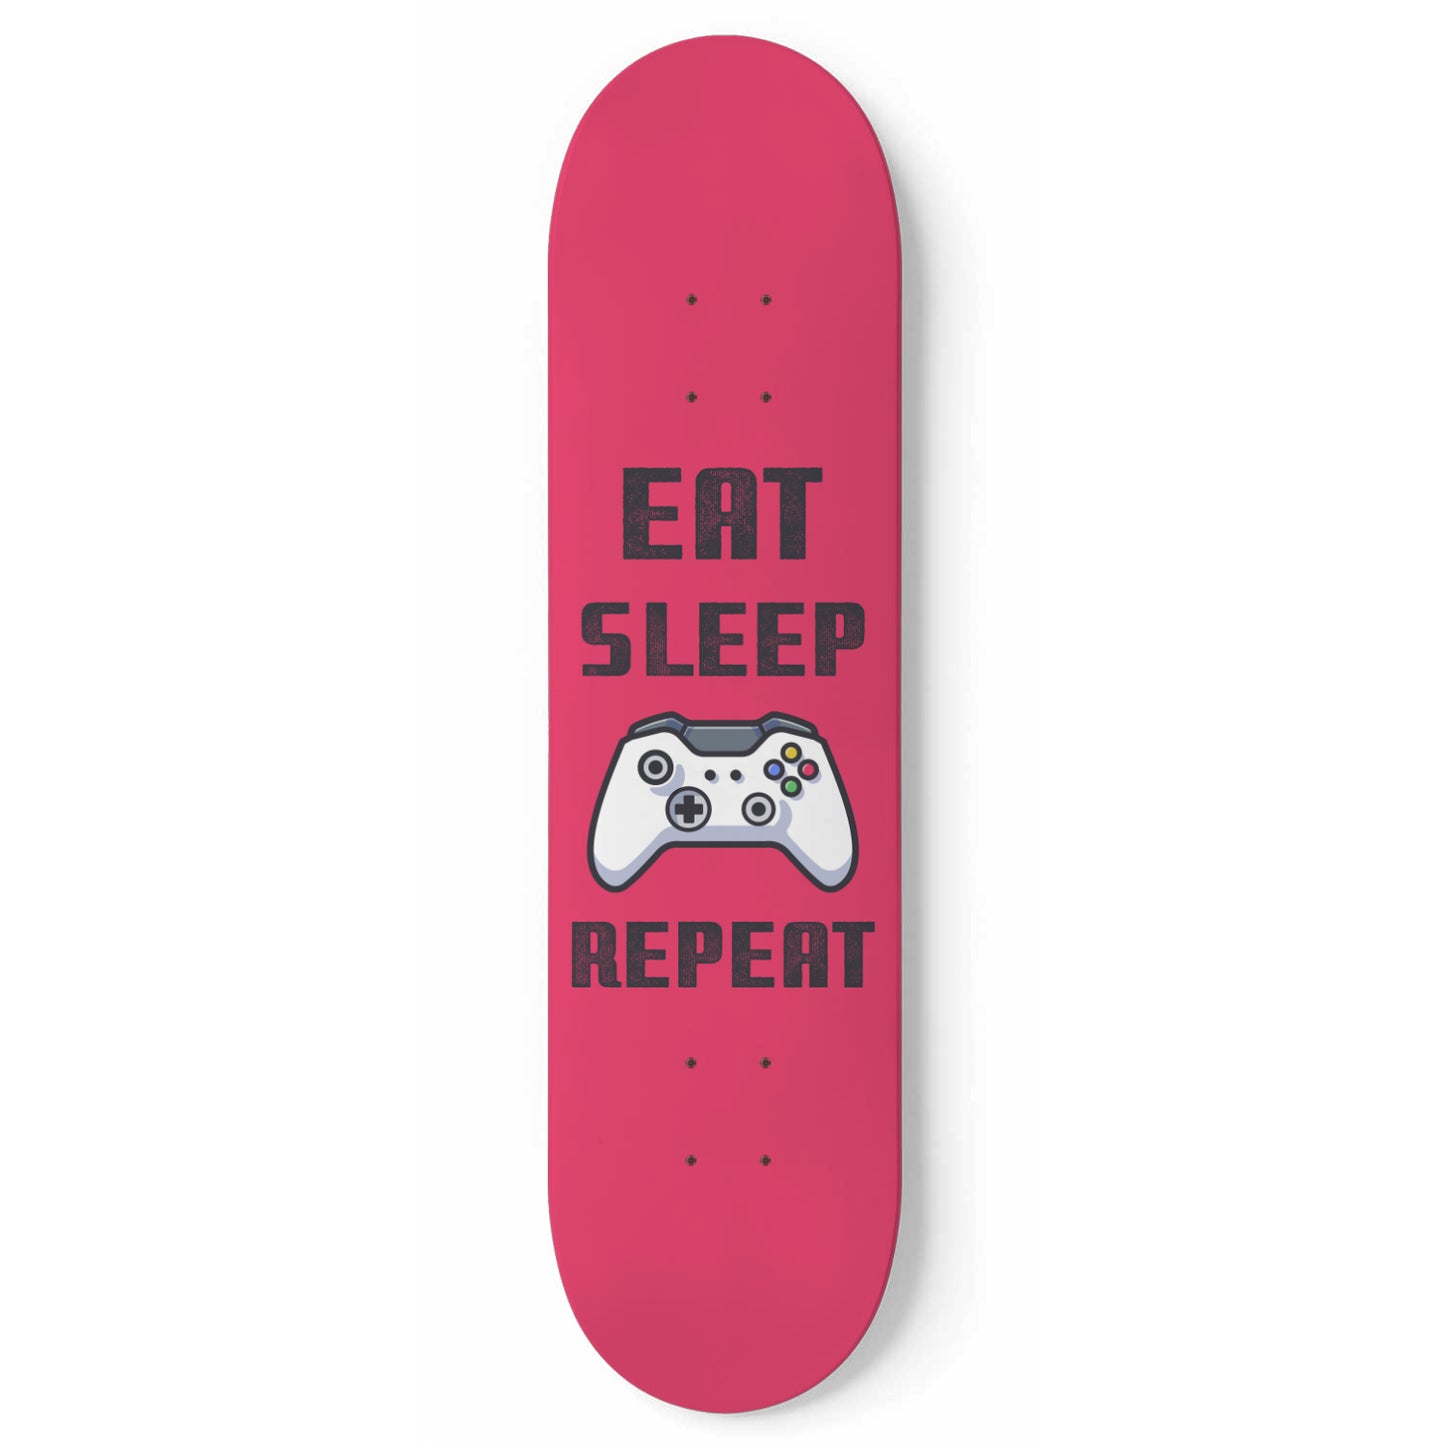 Eat Sleep Game Repeat - Gamer Wall Art Decals - PlayStation Controller - Red Skateboard Wall Art